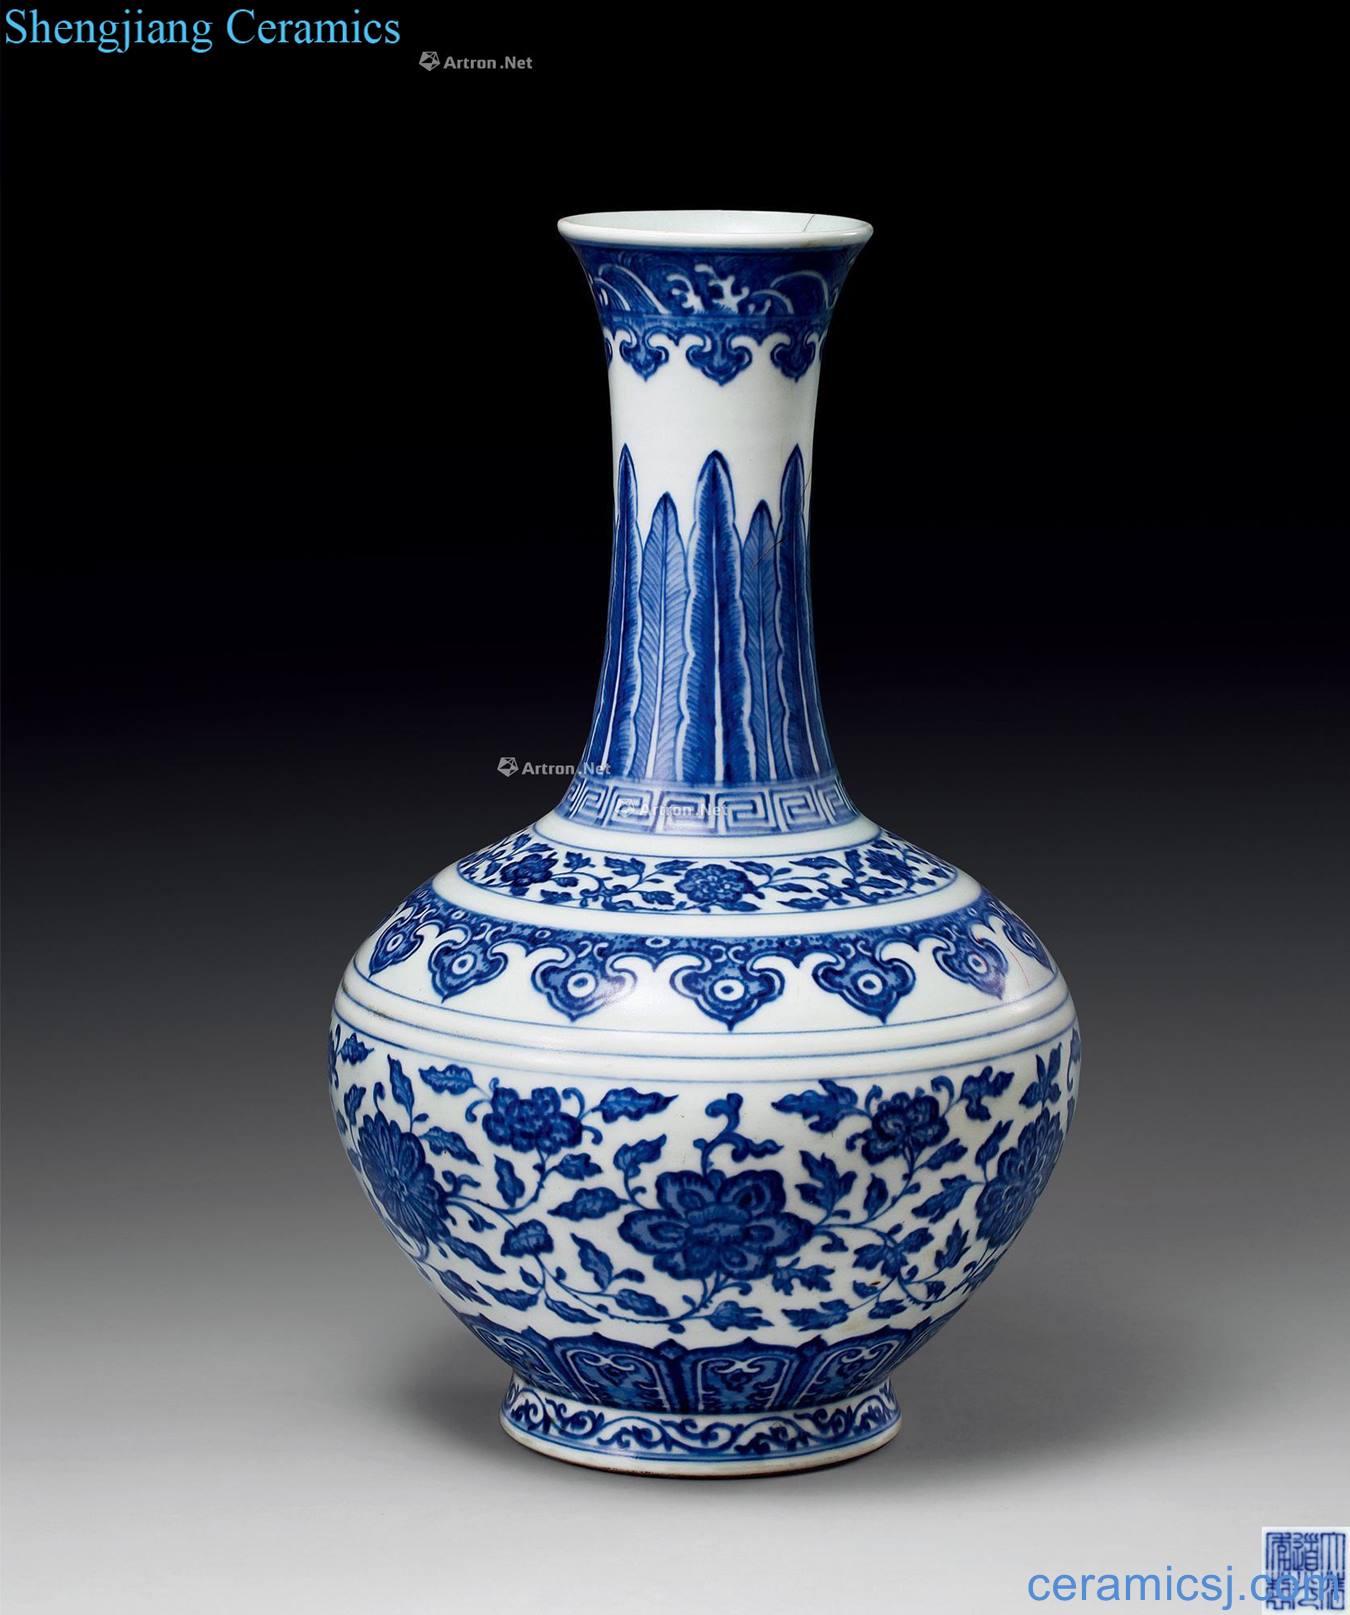 Qing daoguang Blue and white lotus flower grain CV 18 spring bottle